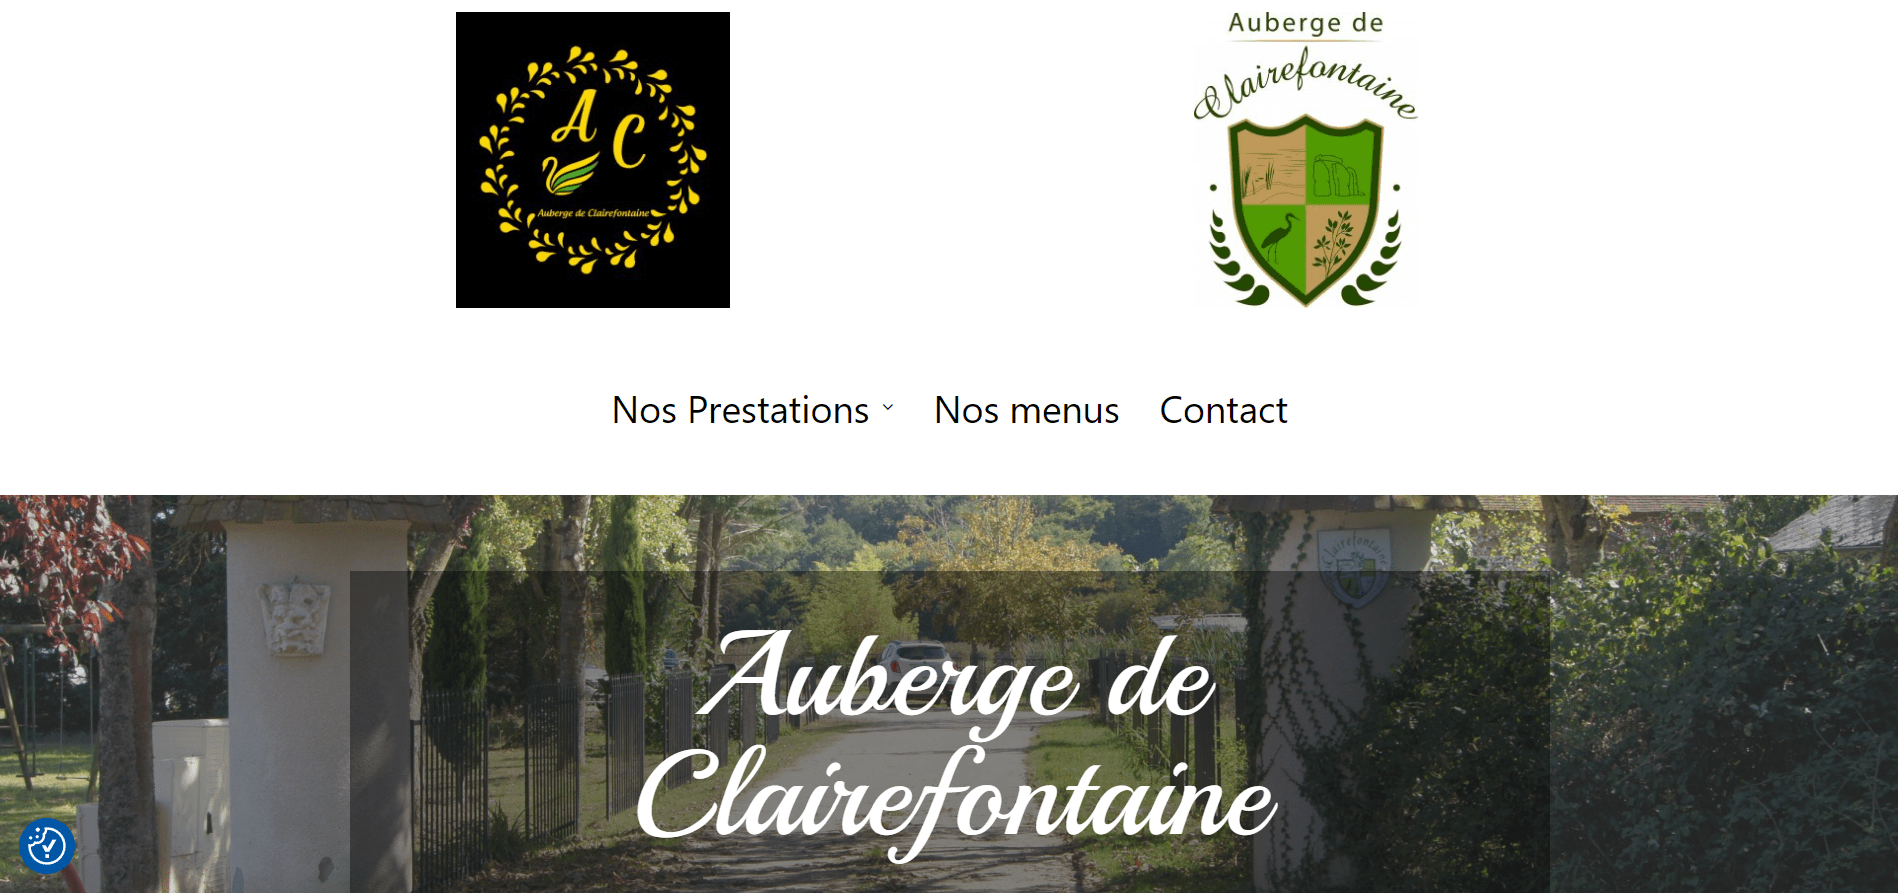 Auberge de Clairefontaine, stea web